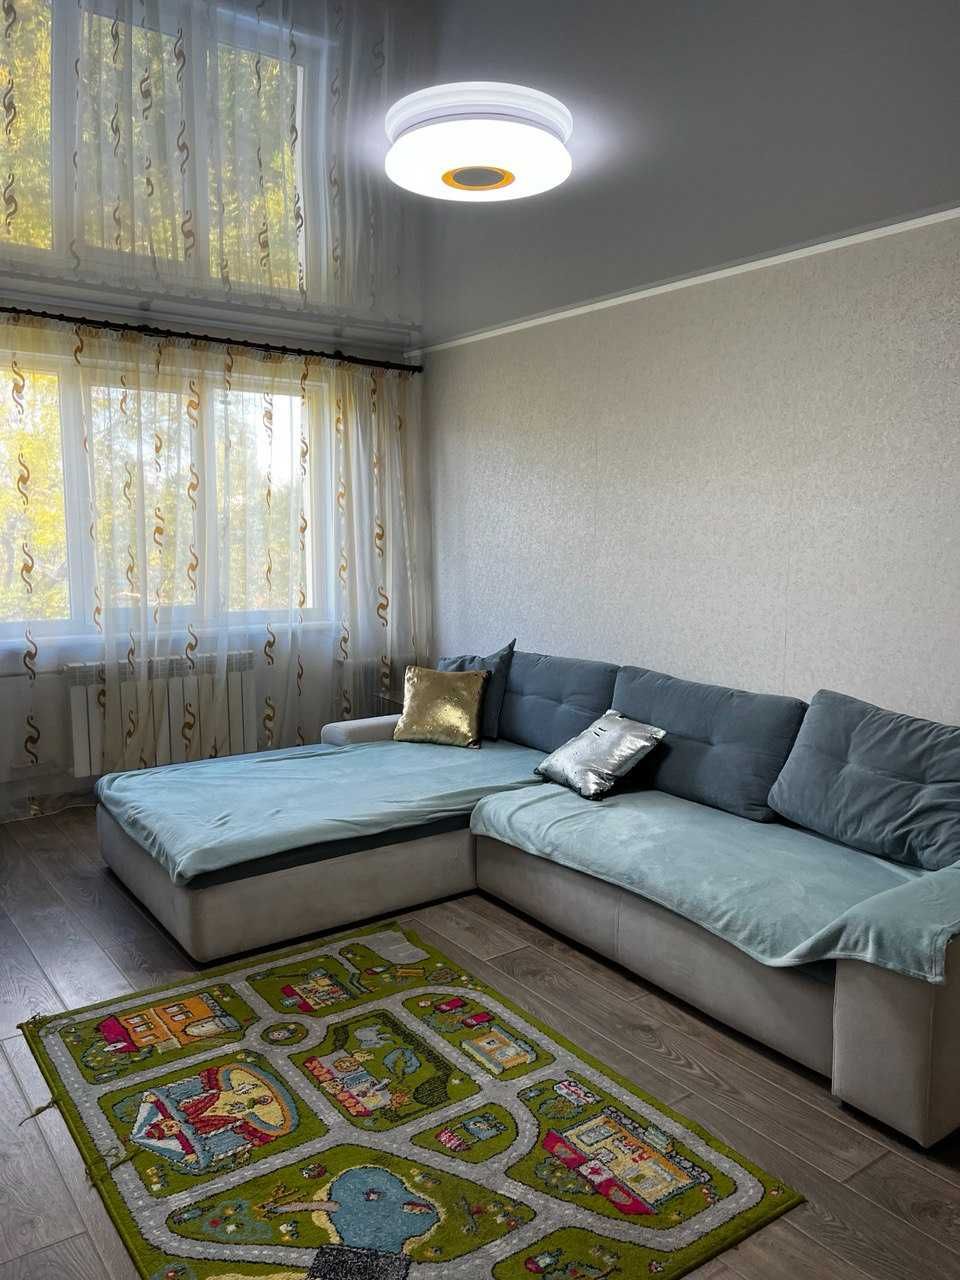 Продажа 3-х комнатная квартира с ремонтом на ул. Бочарова.